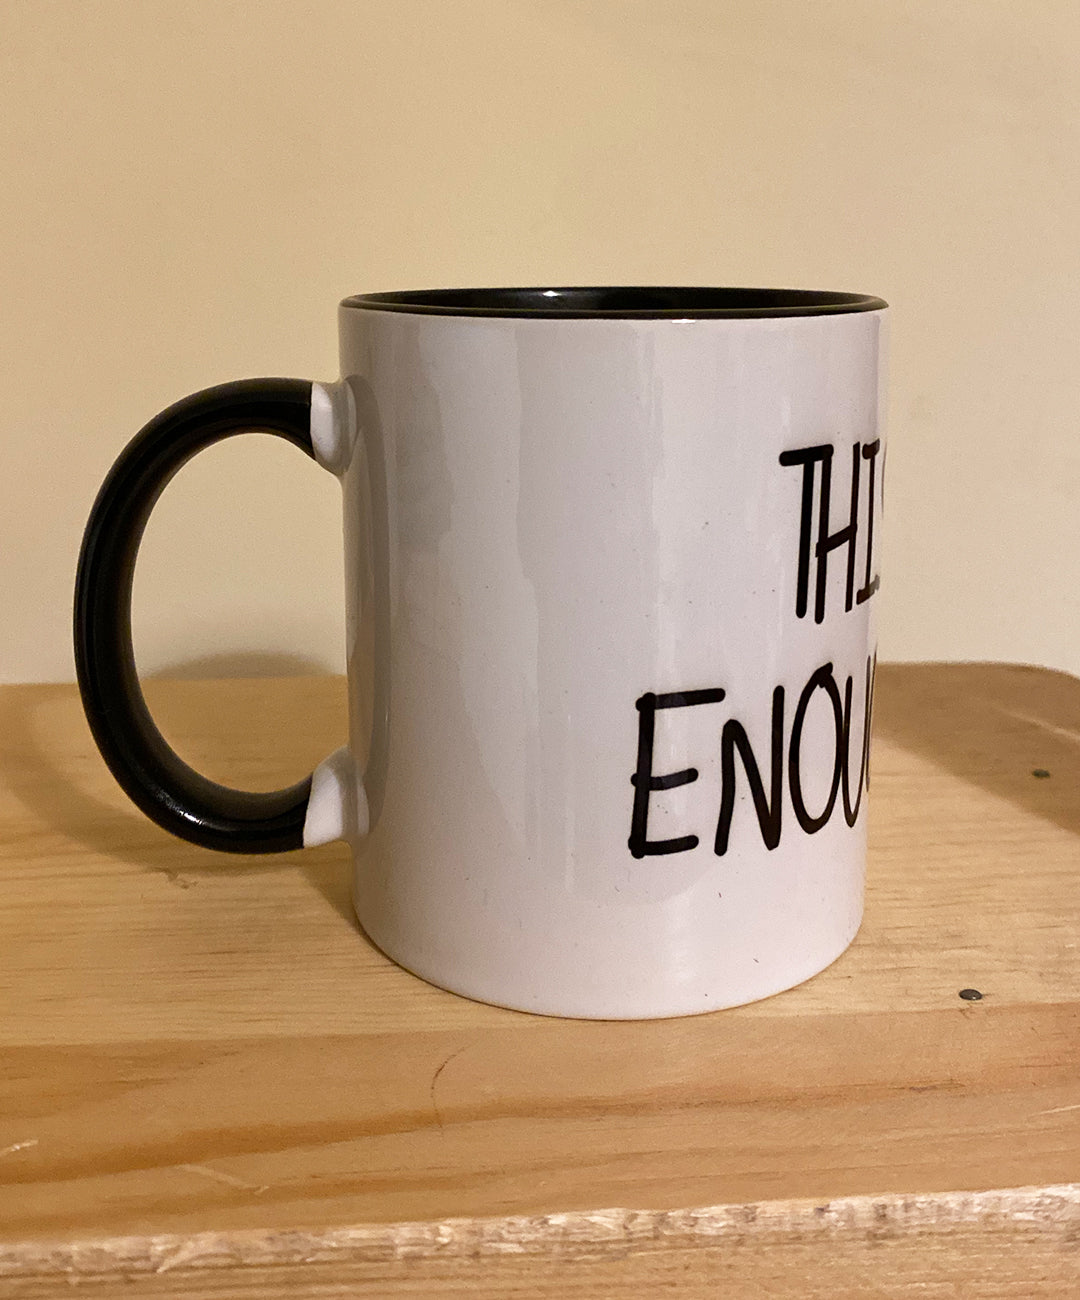 This is not enough coffee mug